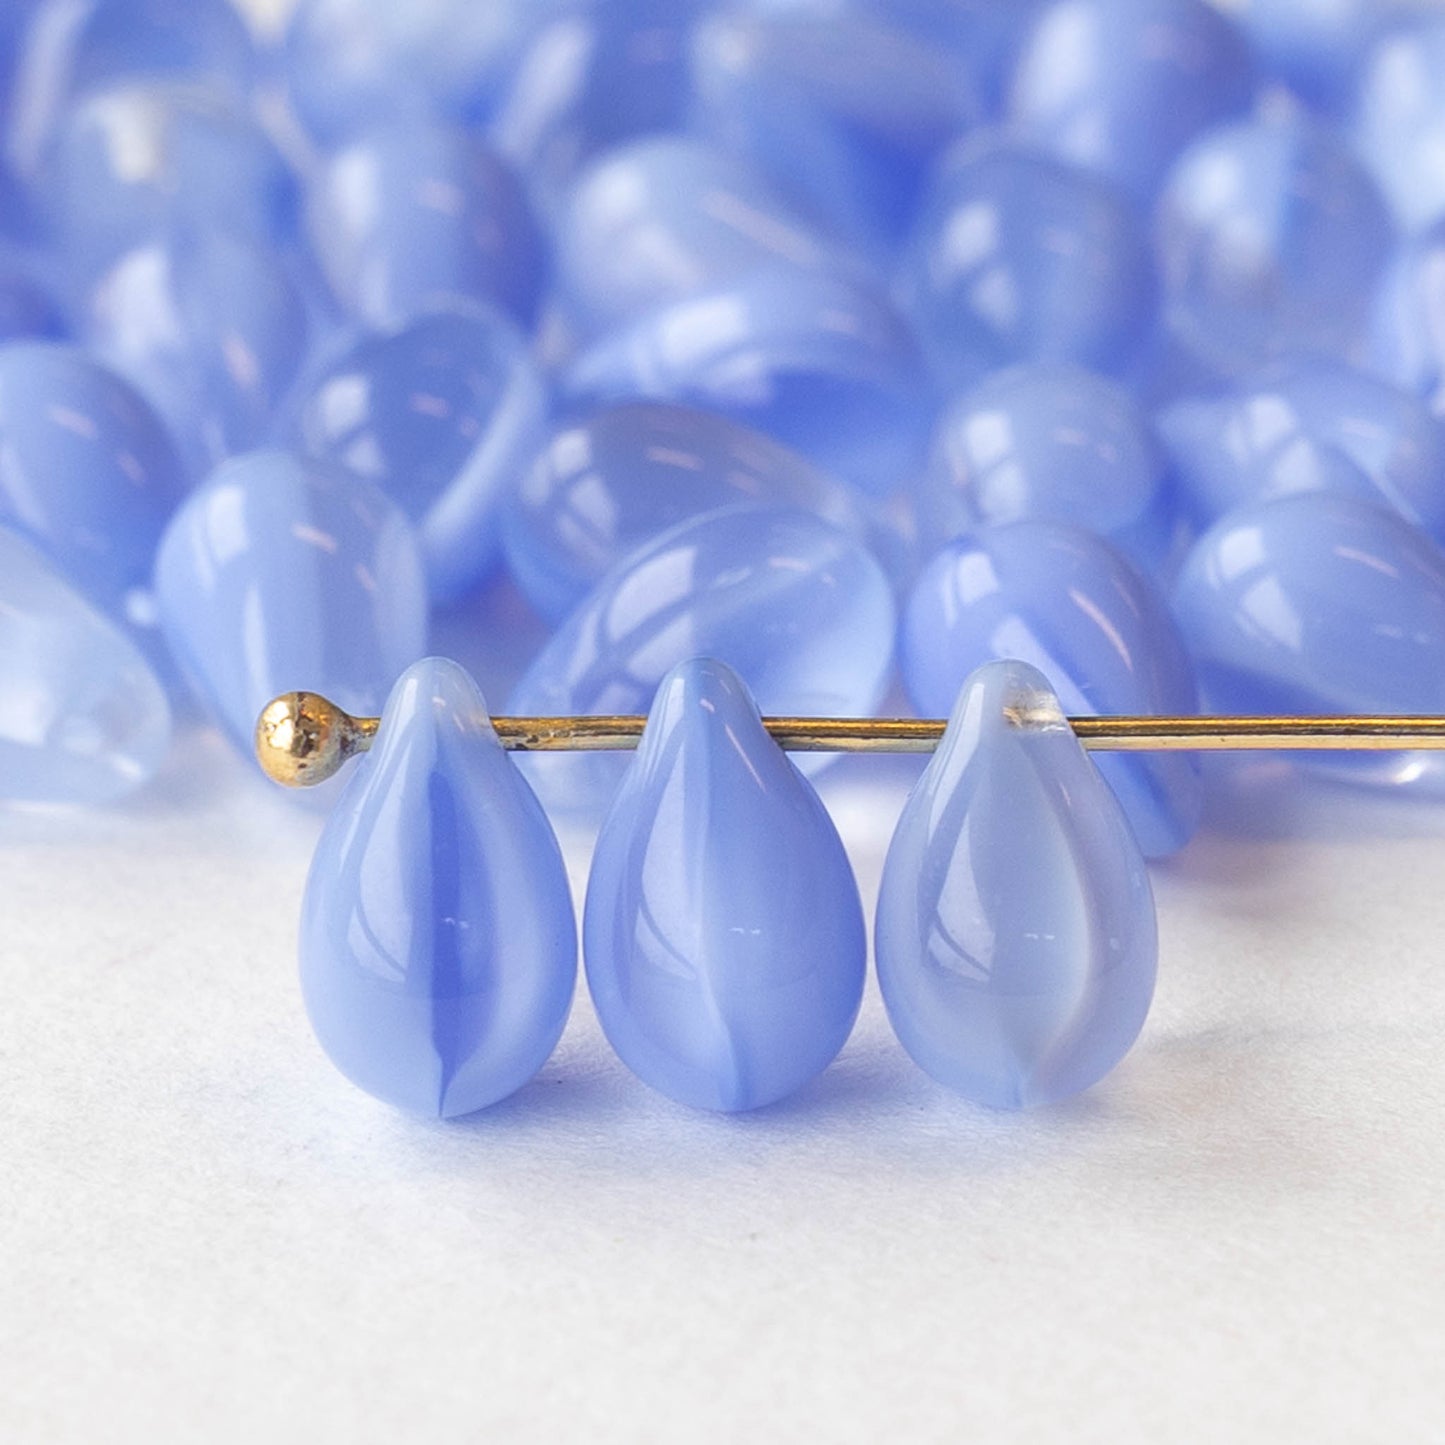 6x9mm Glass Teardrop Beads - Blue Marble - 50 Beads